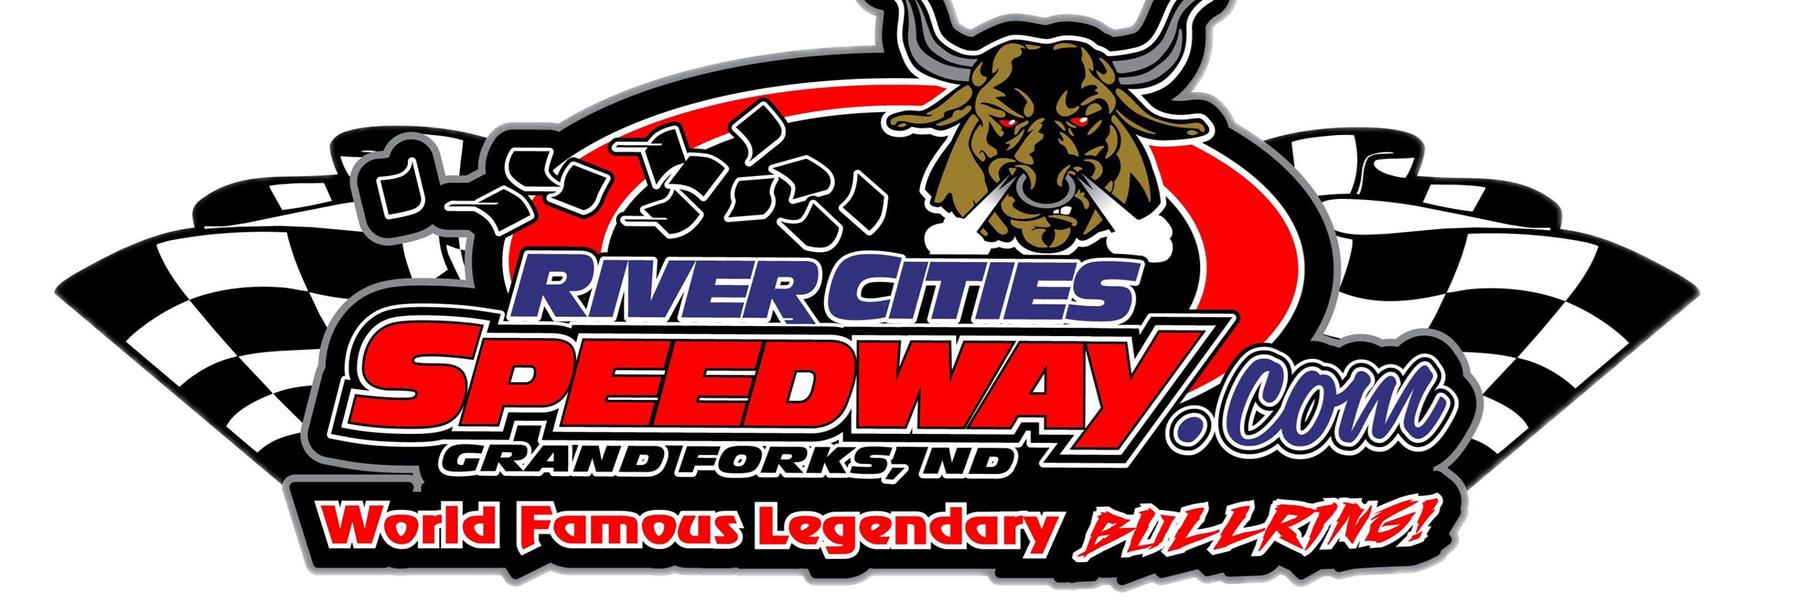 8/5/2022 - River Cities Speedway